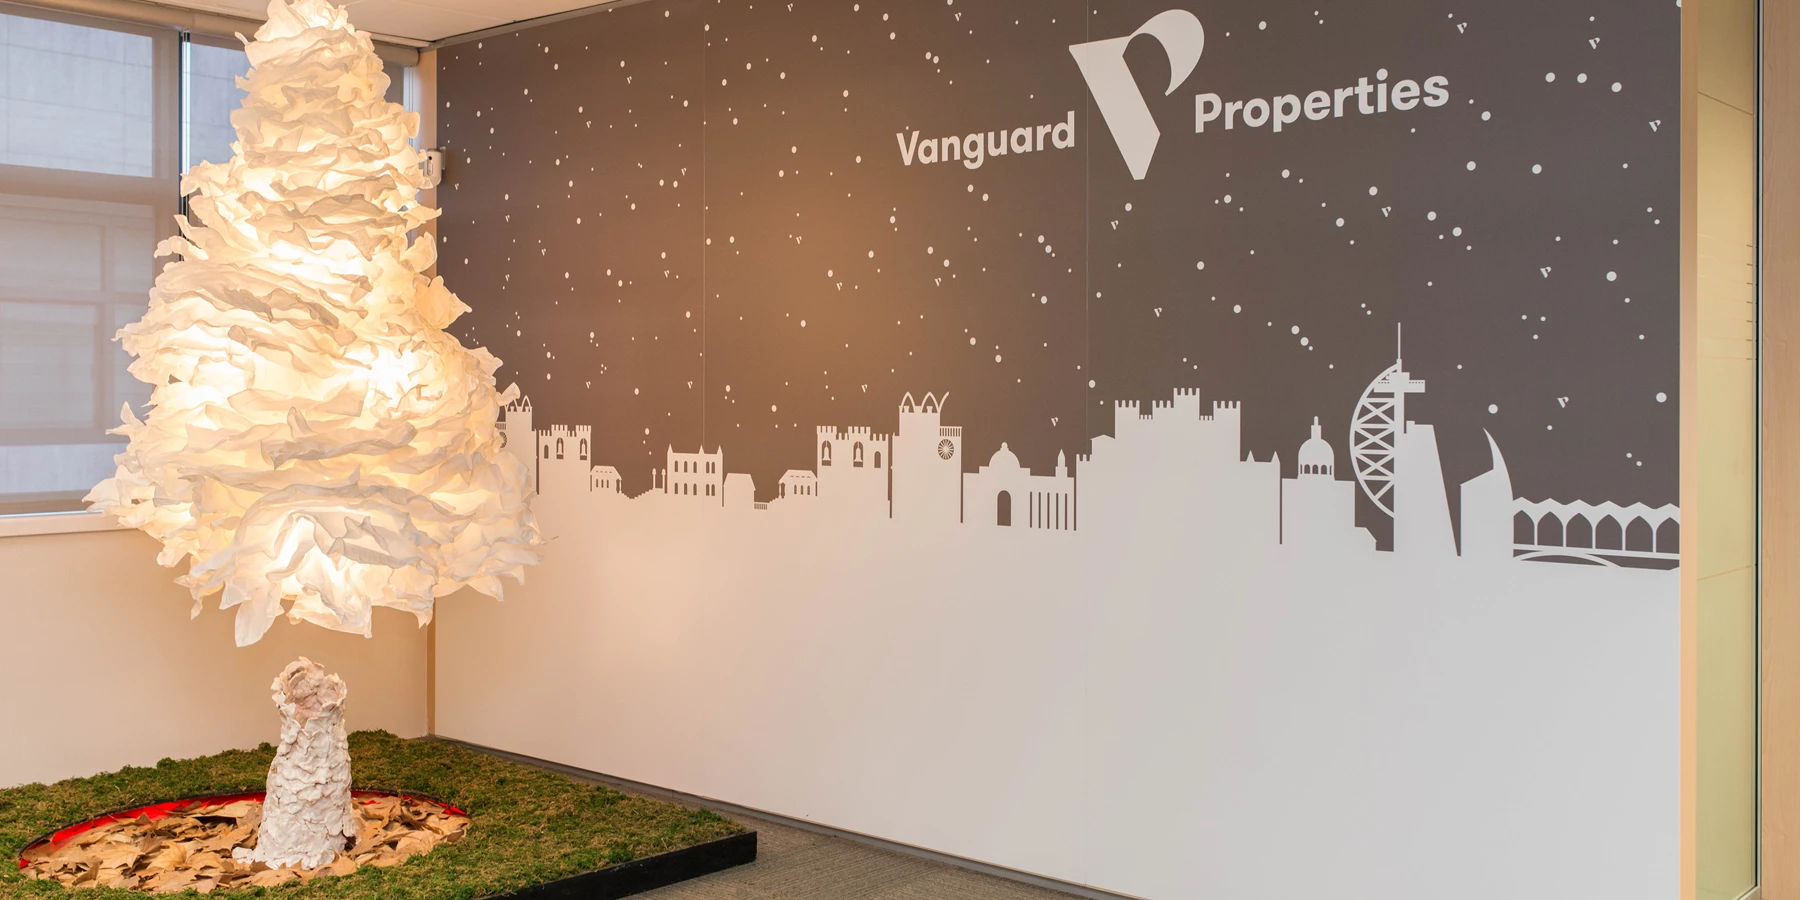 Vanguard Office Inauguration